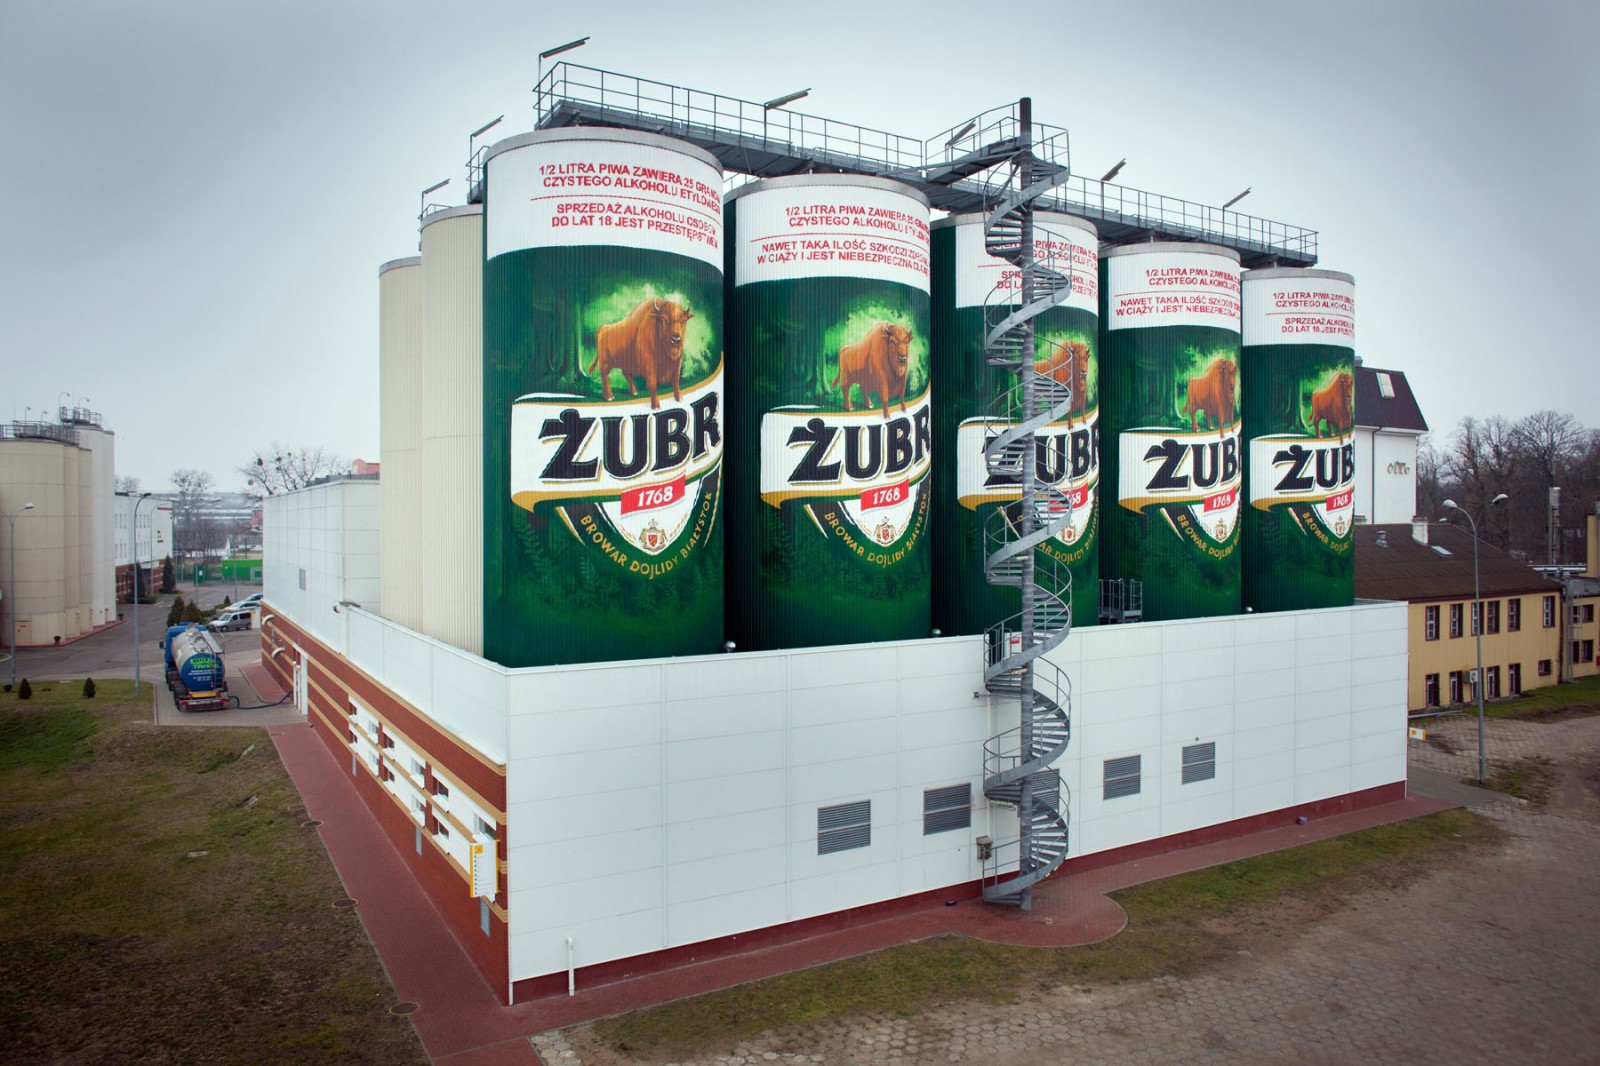 Large format mural on tanks in Zubr brewery Kompania Piwowarska | Zubr tanks | Portfolio